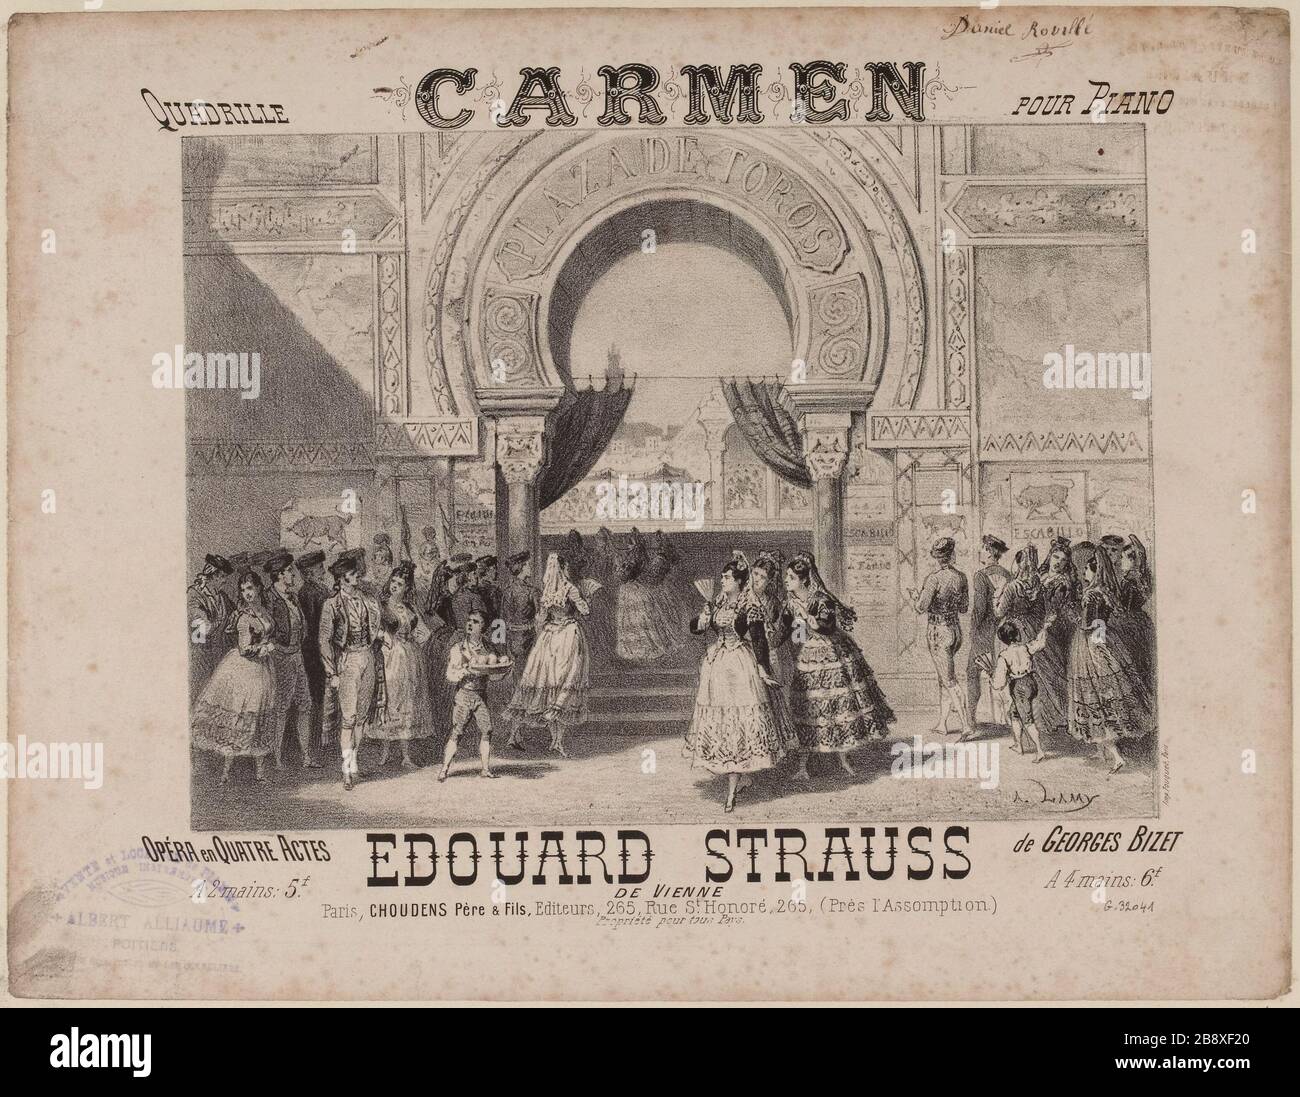 Carmen / Quadrille for piano / Eduard Strauss [coverage] Stock Photo